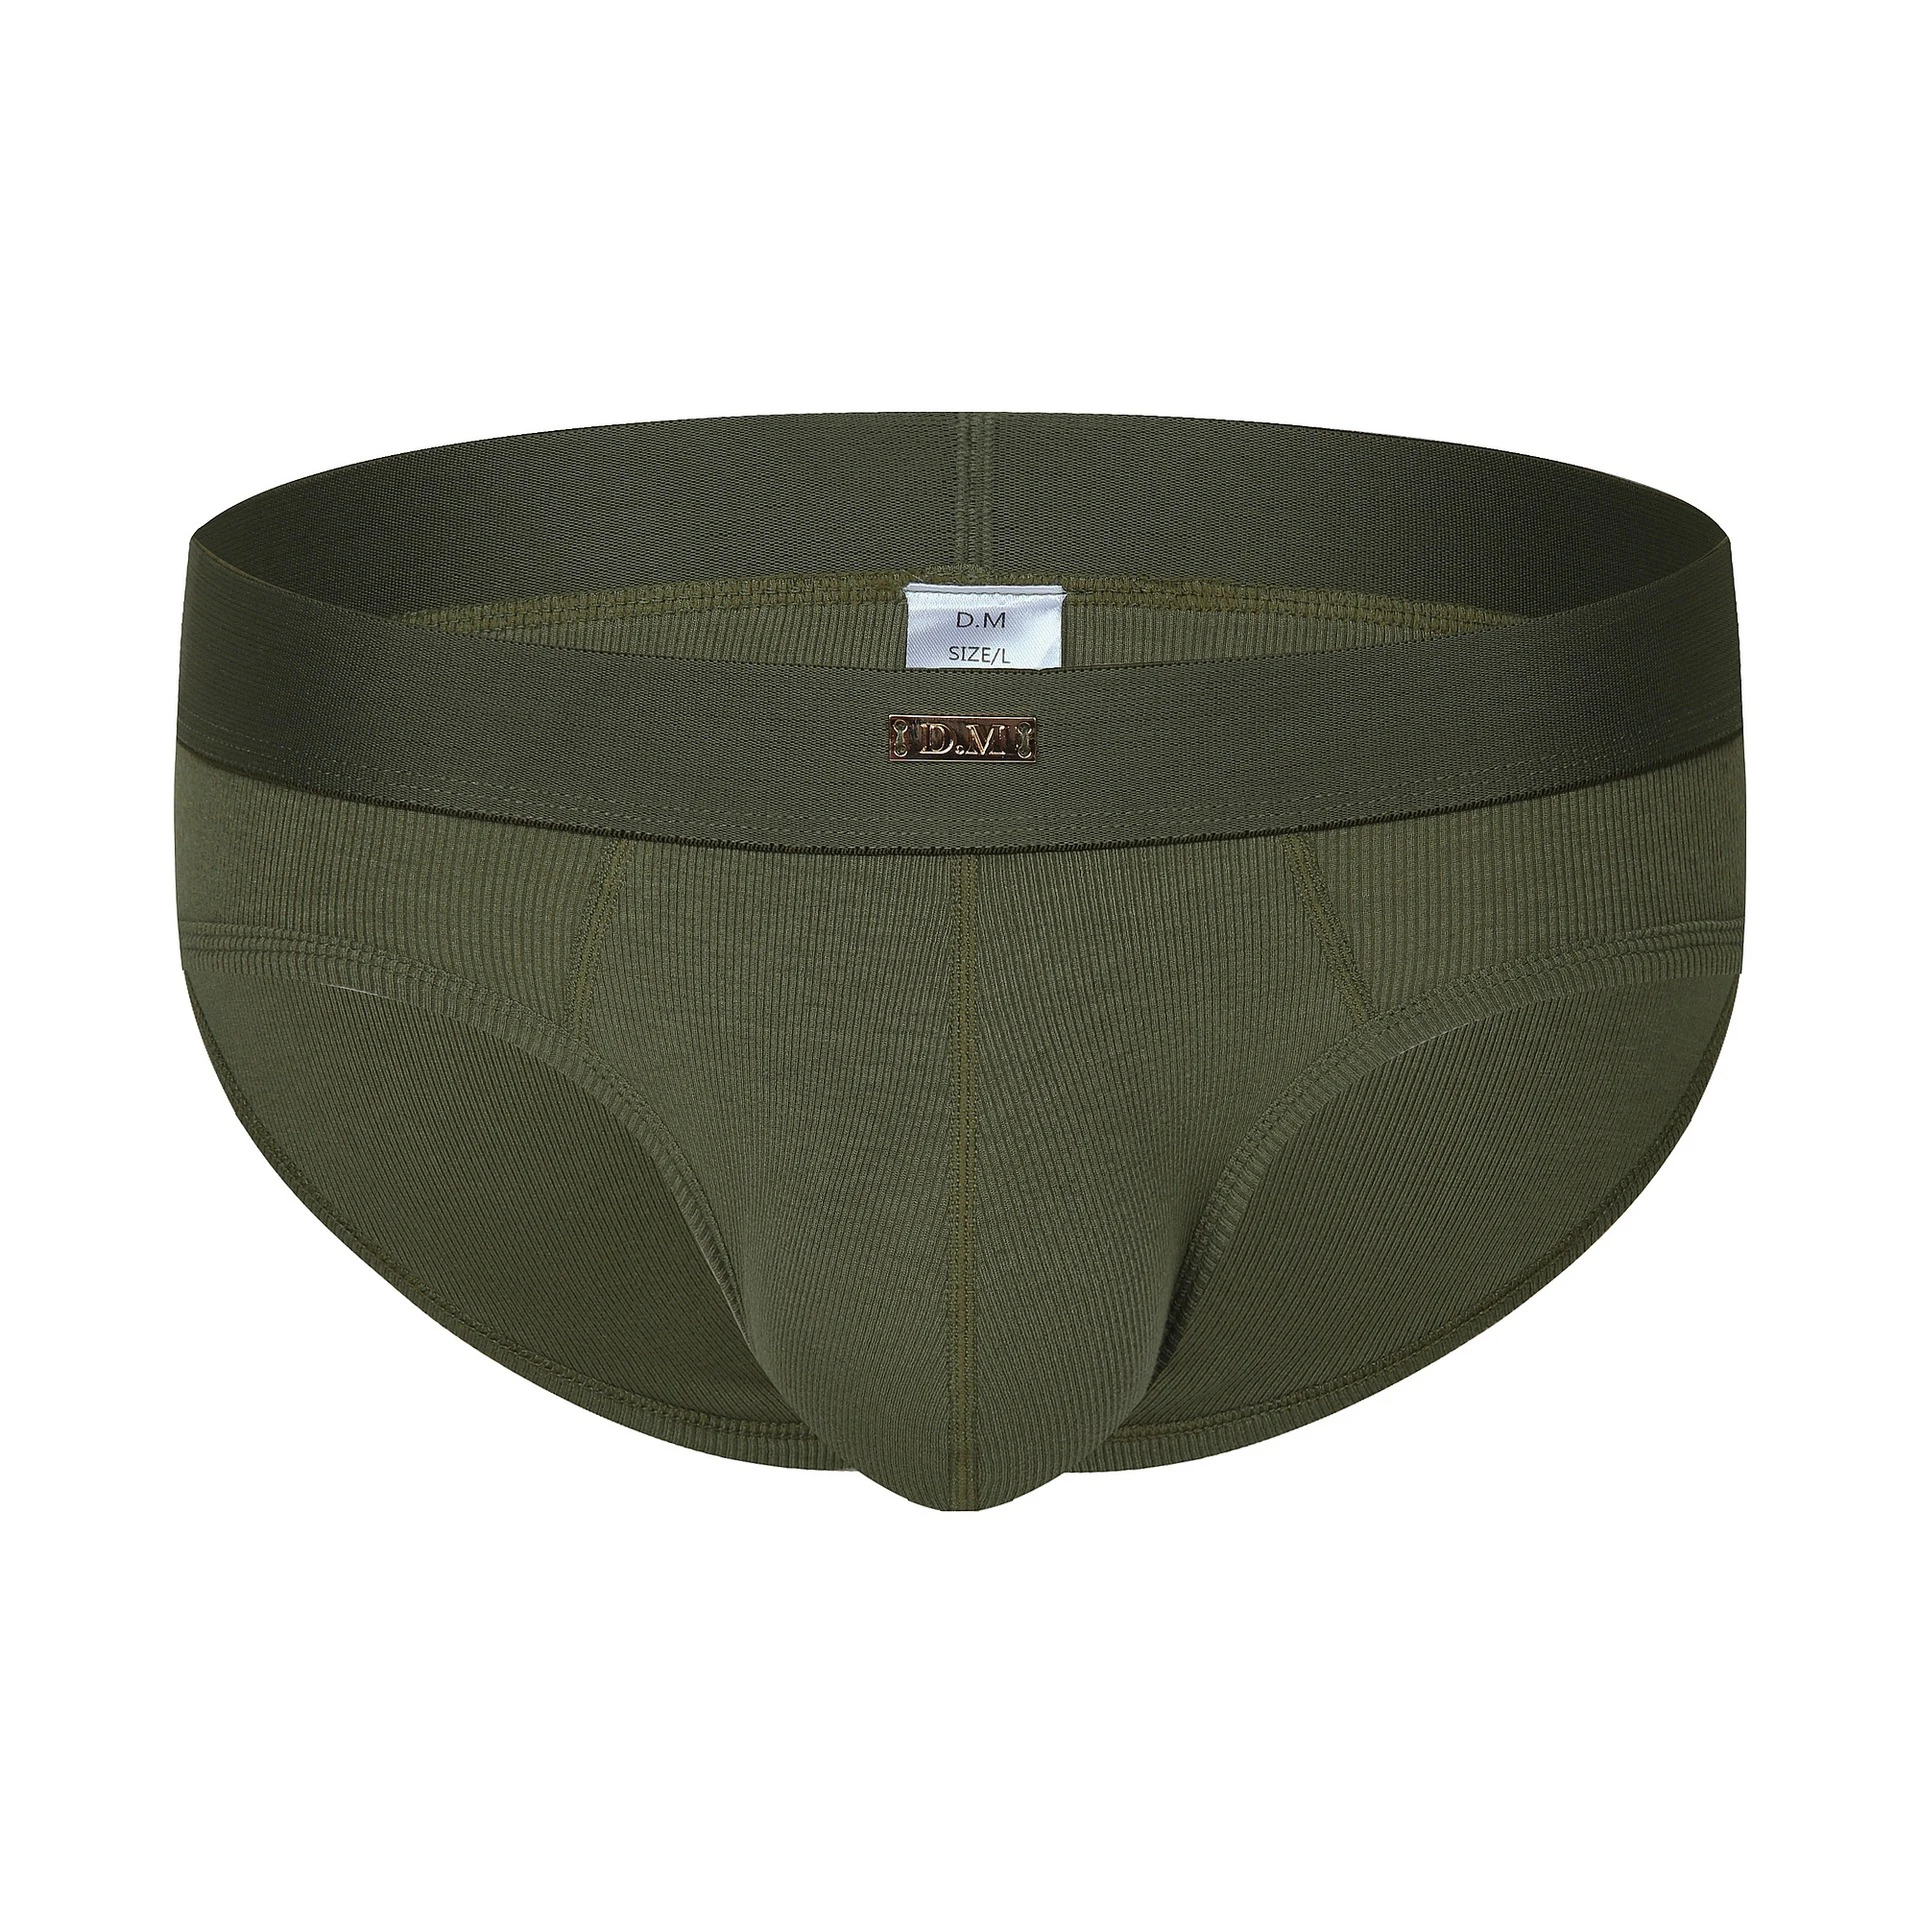 Men's Underwear Wide Waist Solid Color Cotton Modal Soft Breathable Briefs Basic Bottom Metal Label Simple Style Underpants